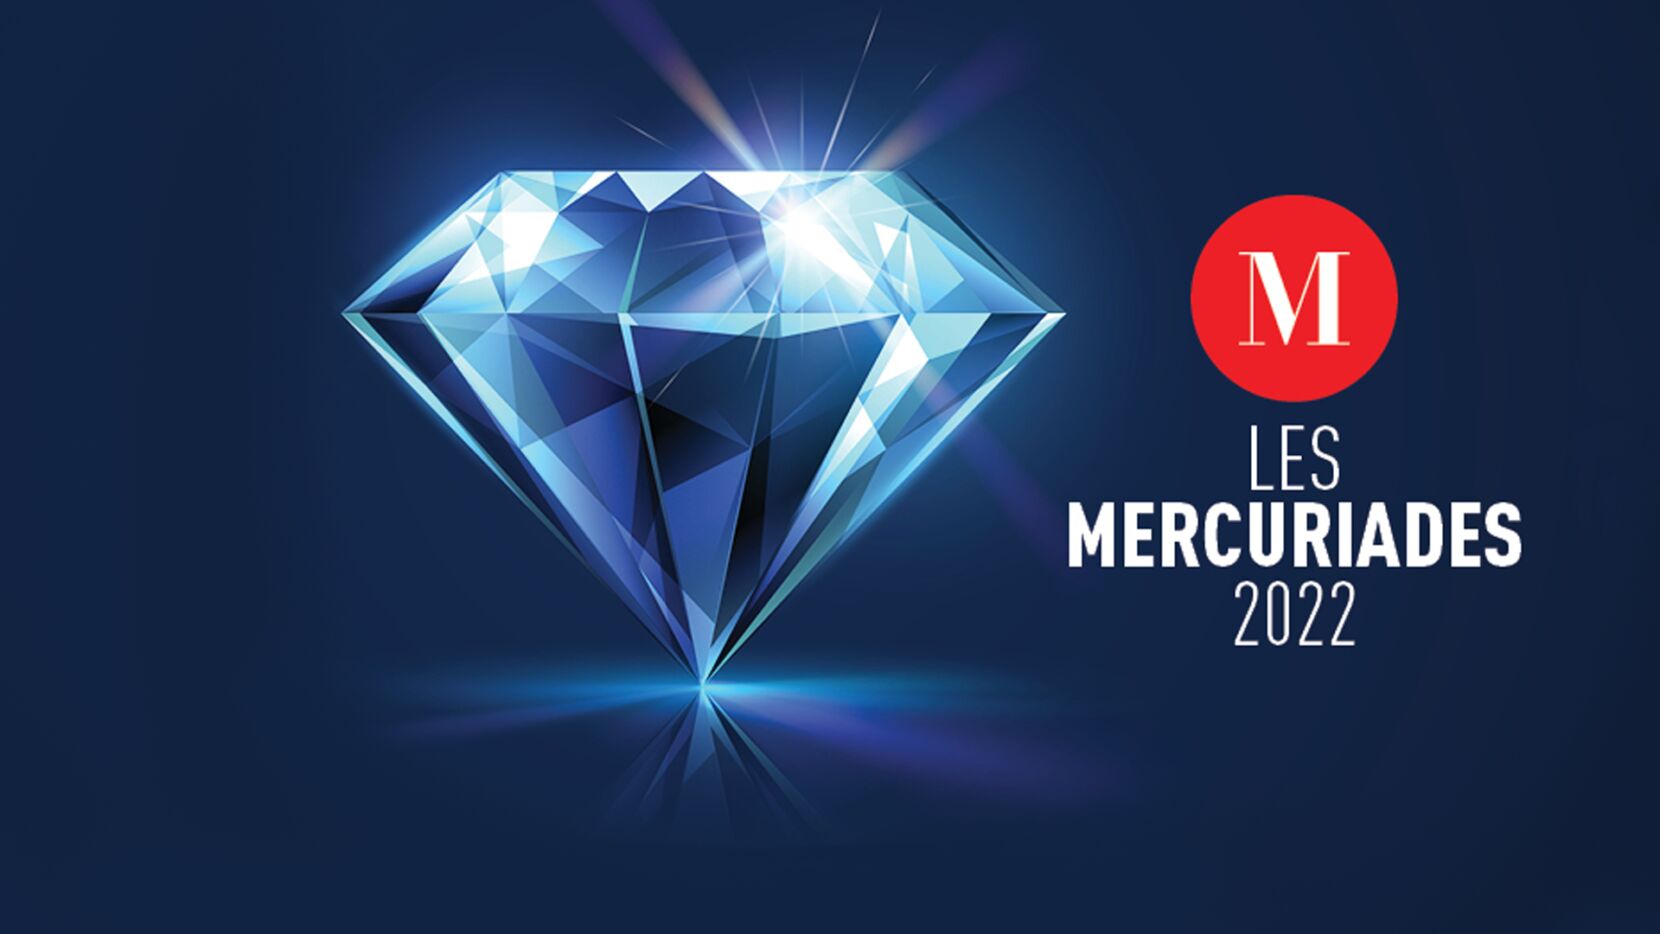 Artopex is a double finalist in The Mercuriades contest!